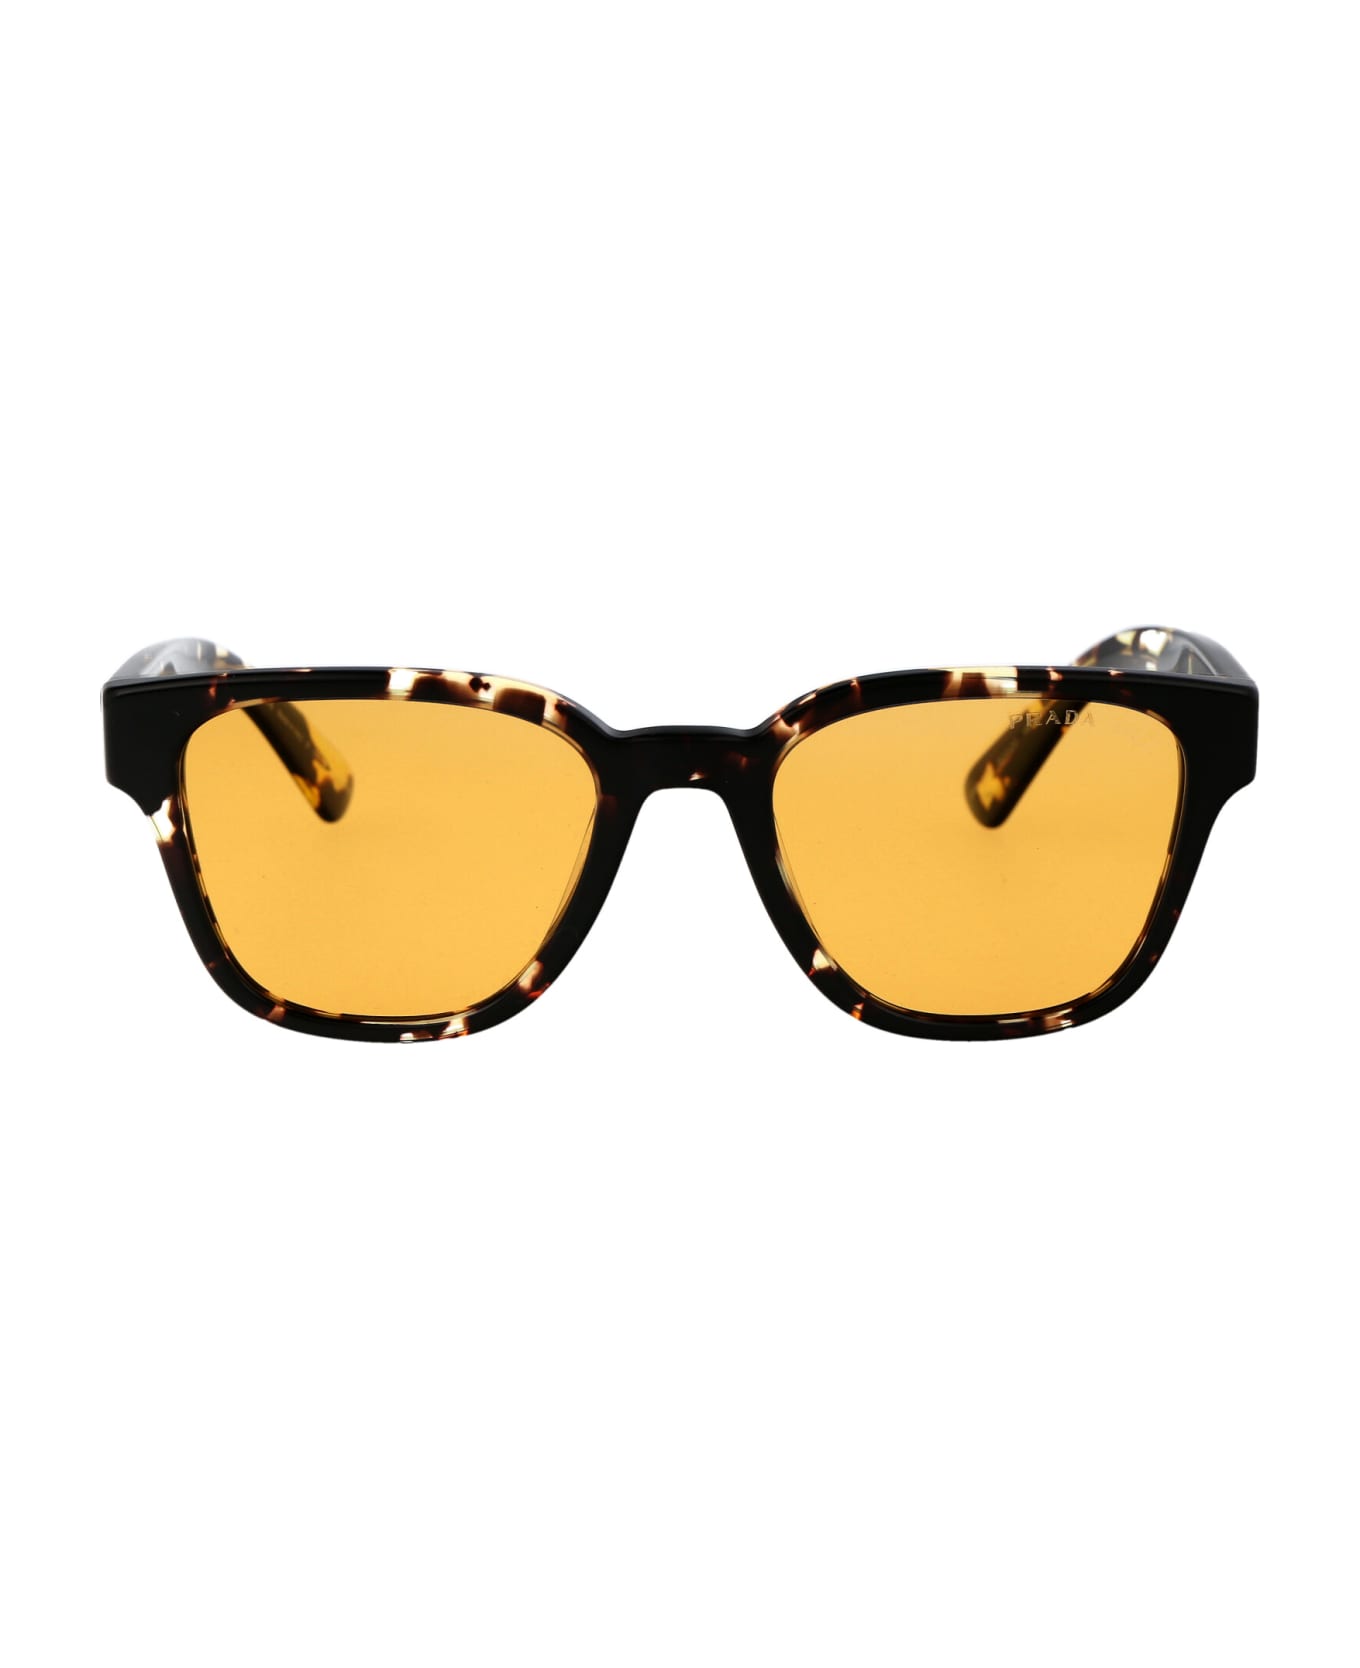 Prada Eyewear 0pr A04s Sunglasses - 16O20C Havana Black/Yellow